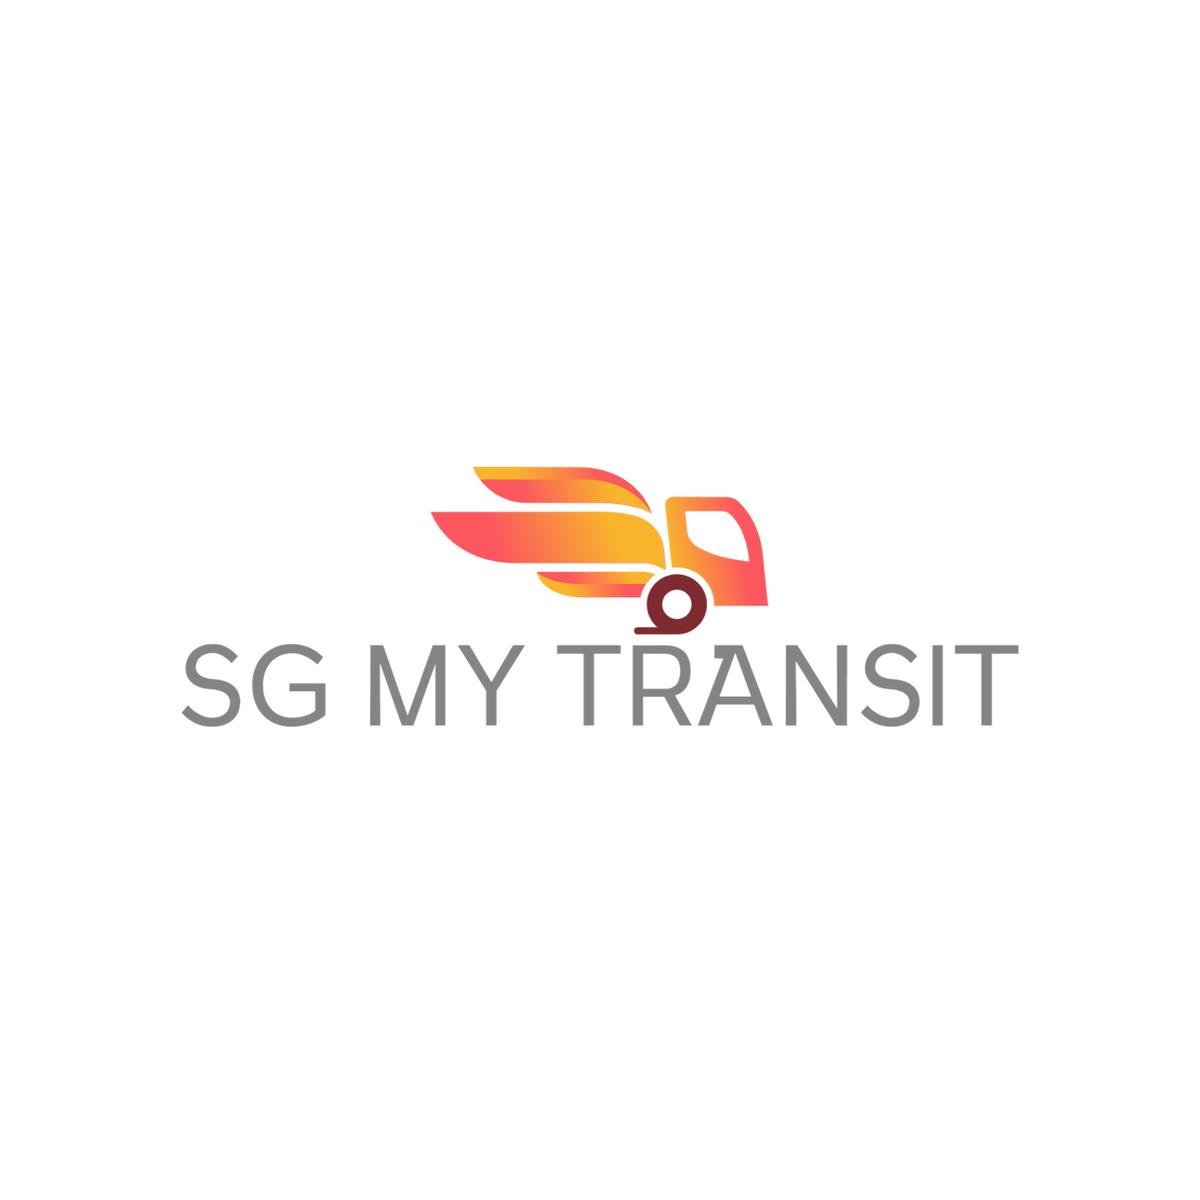 SG MY Transit's images